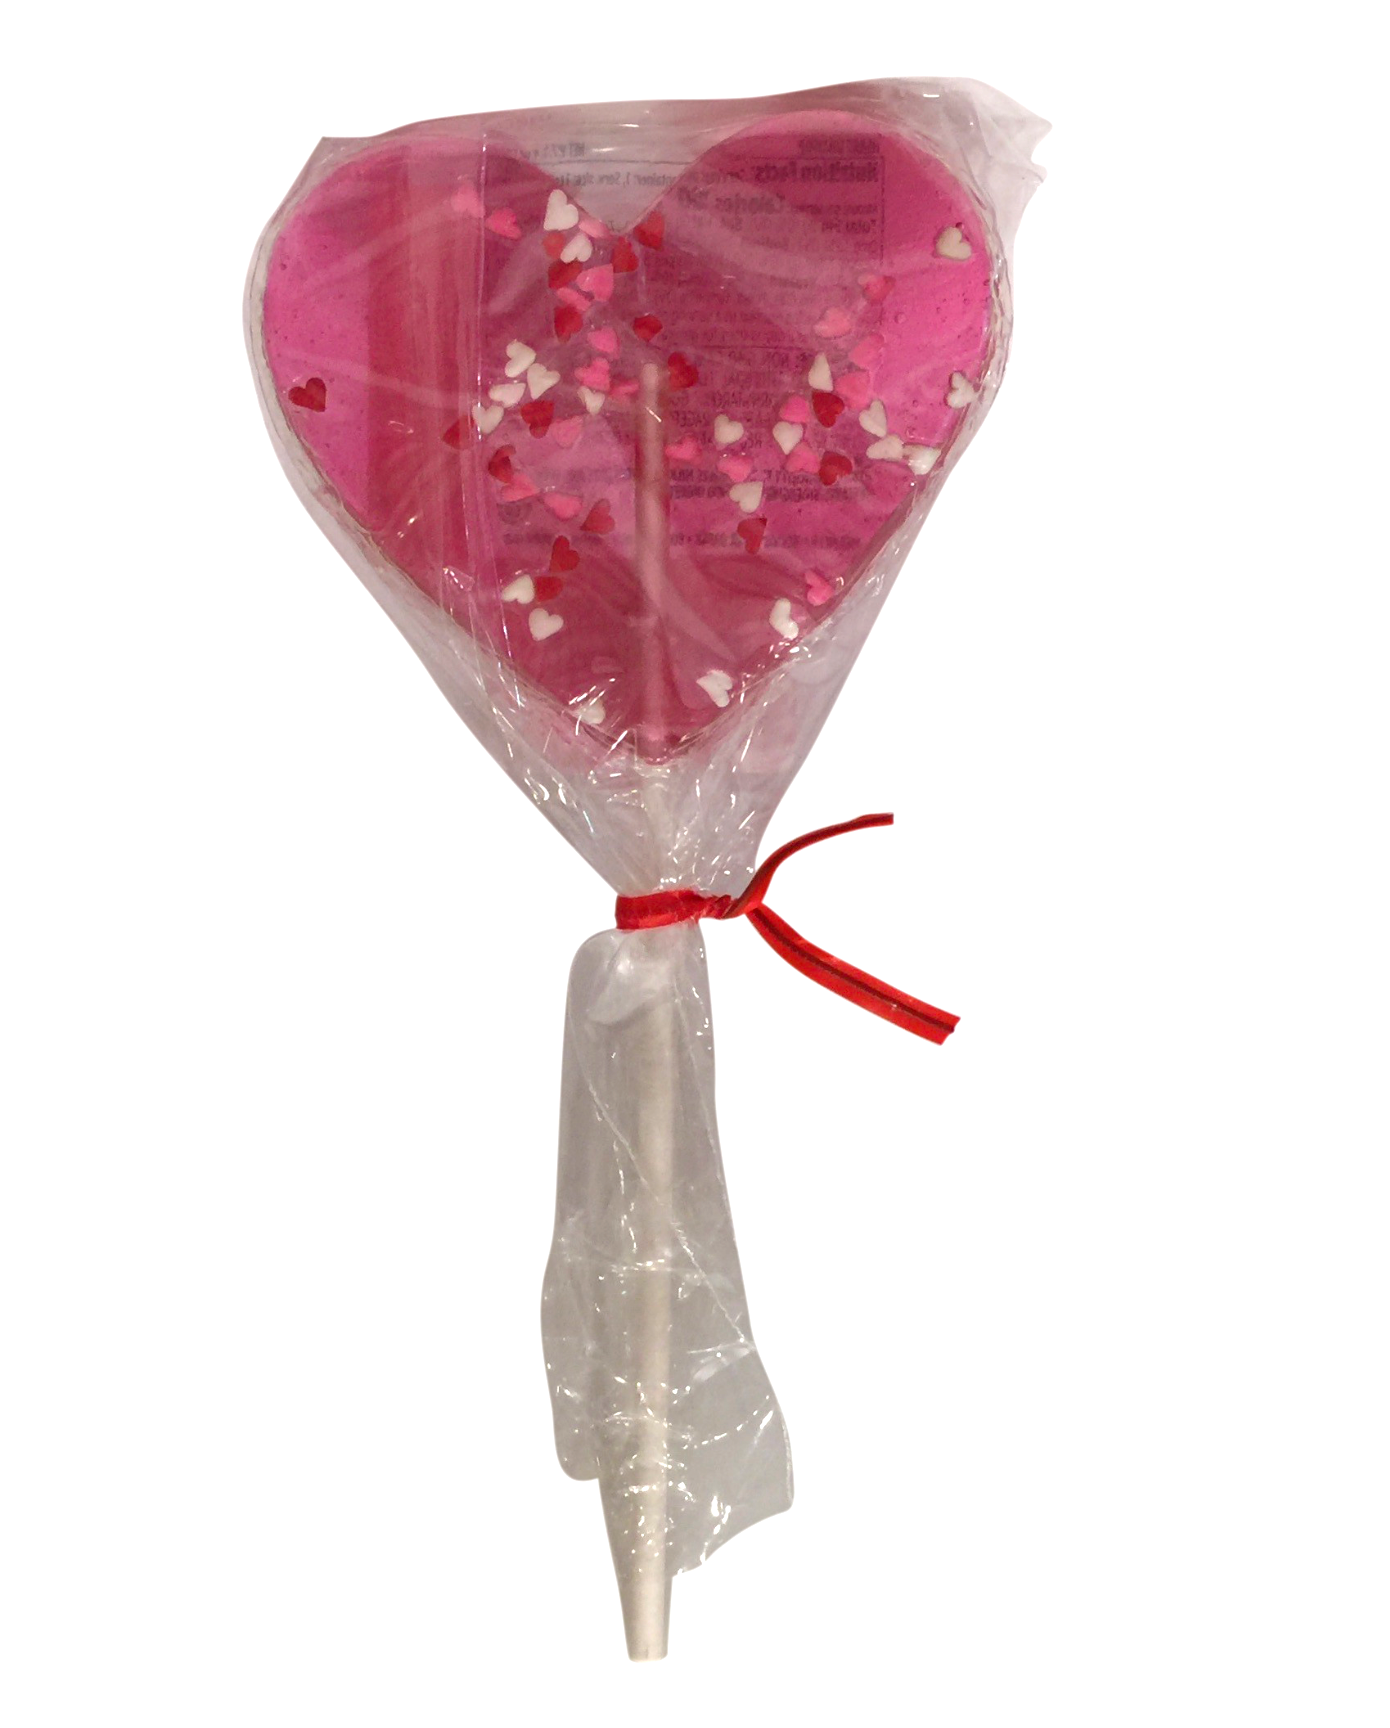 Melville confetti pink watermelon heart lollipop 1.4oz (40g)